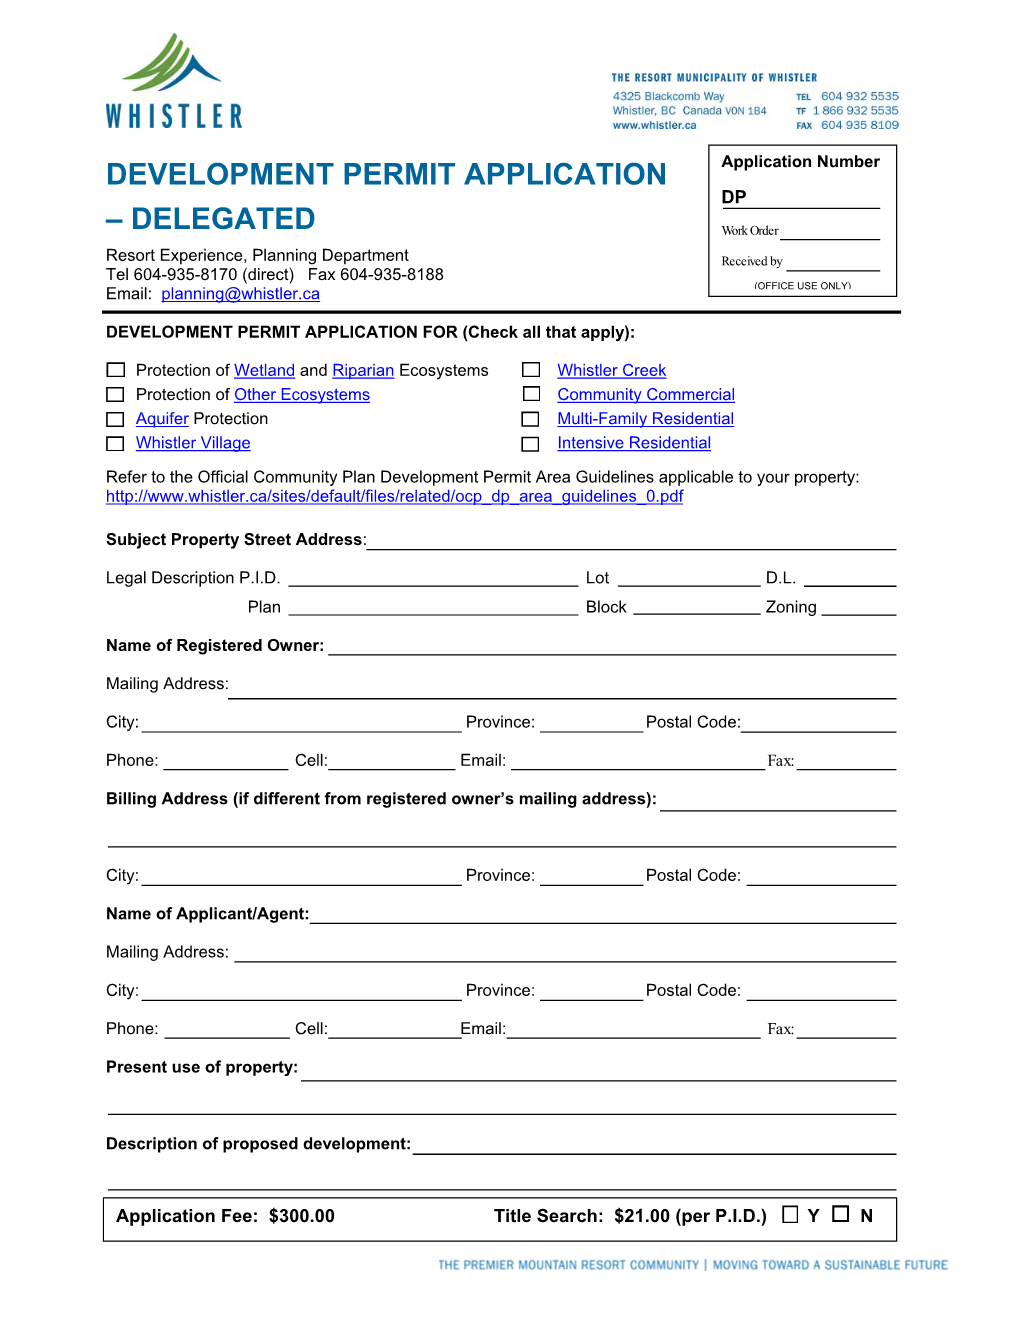 Development Permit Application – Delegated